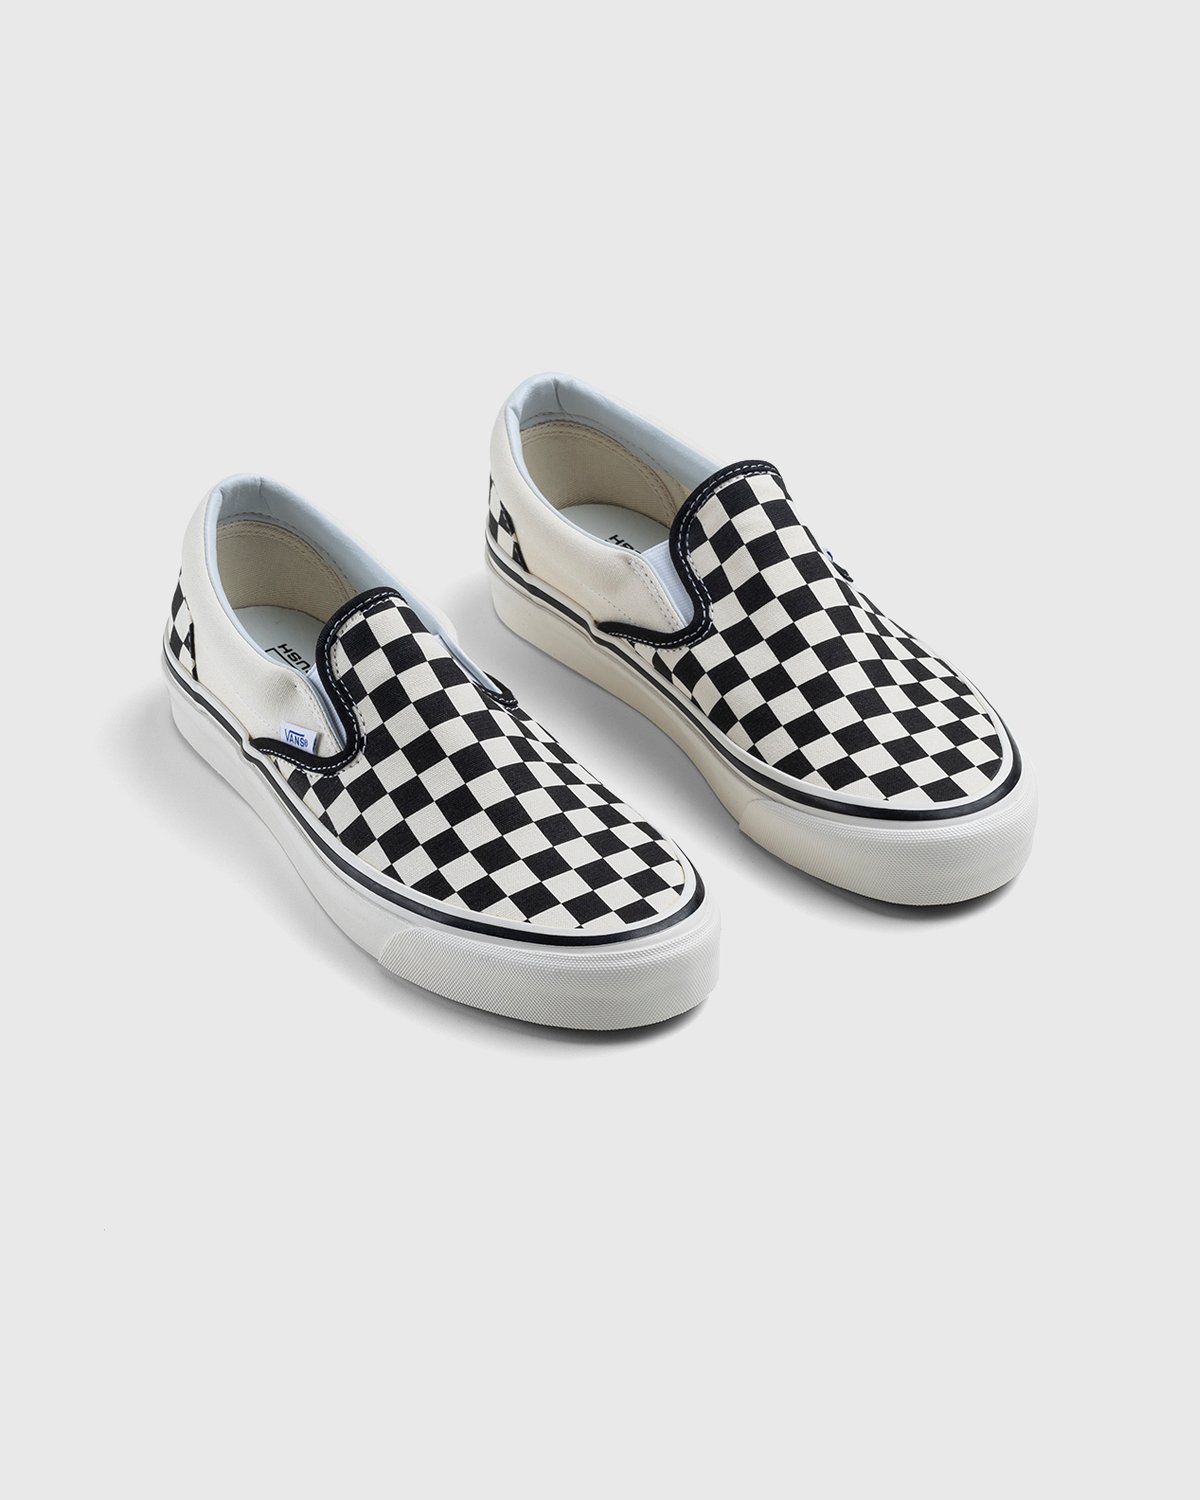 Vans - Anaheim Factory Classic Slip-On 98 DX Checkerboard - Footwear - White - Image 3